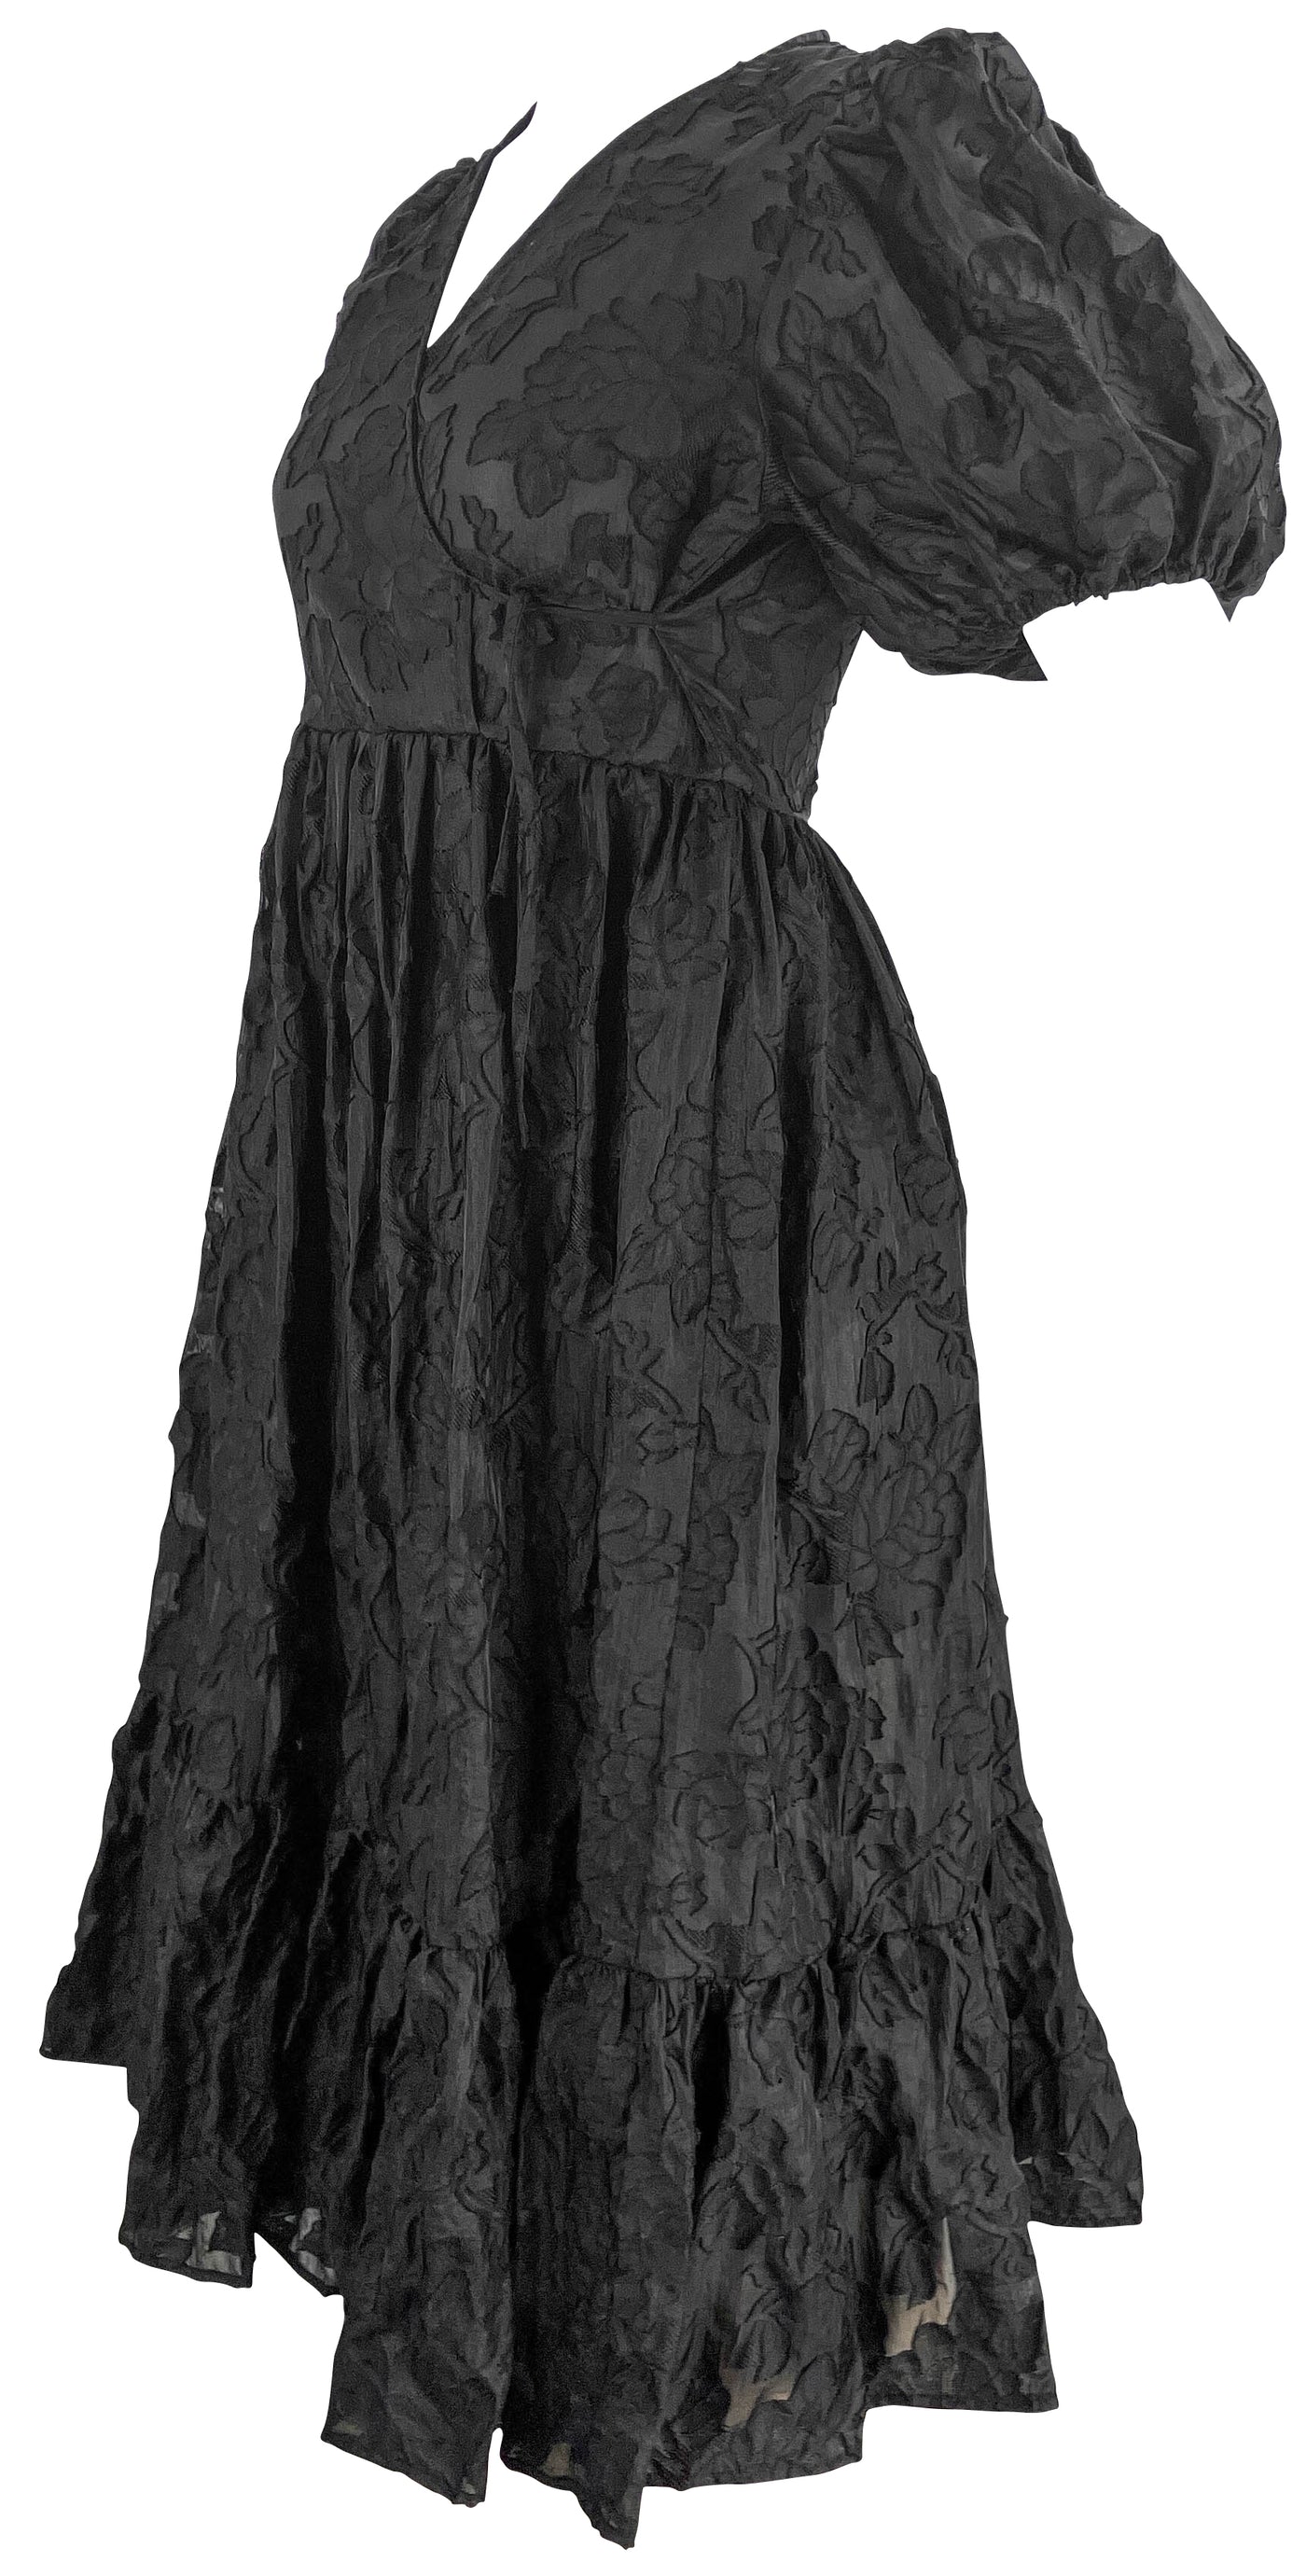 Stella Nova Trinke Jacquard Dress in Black - Discounts on Stella Nova at UAL